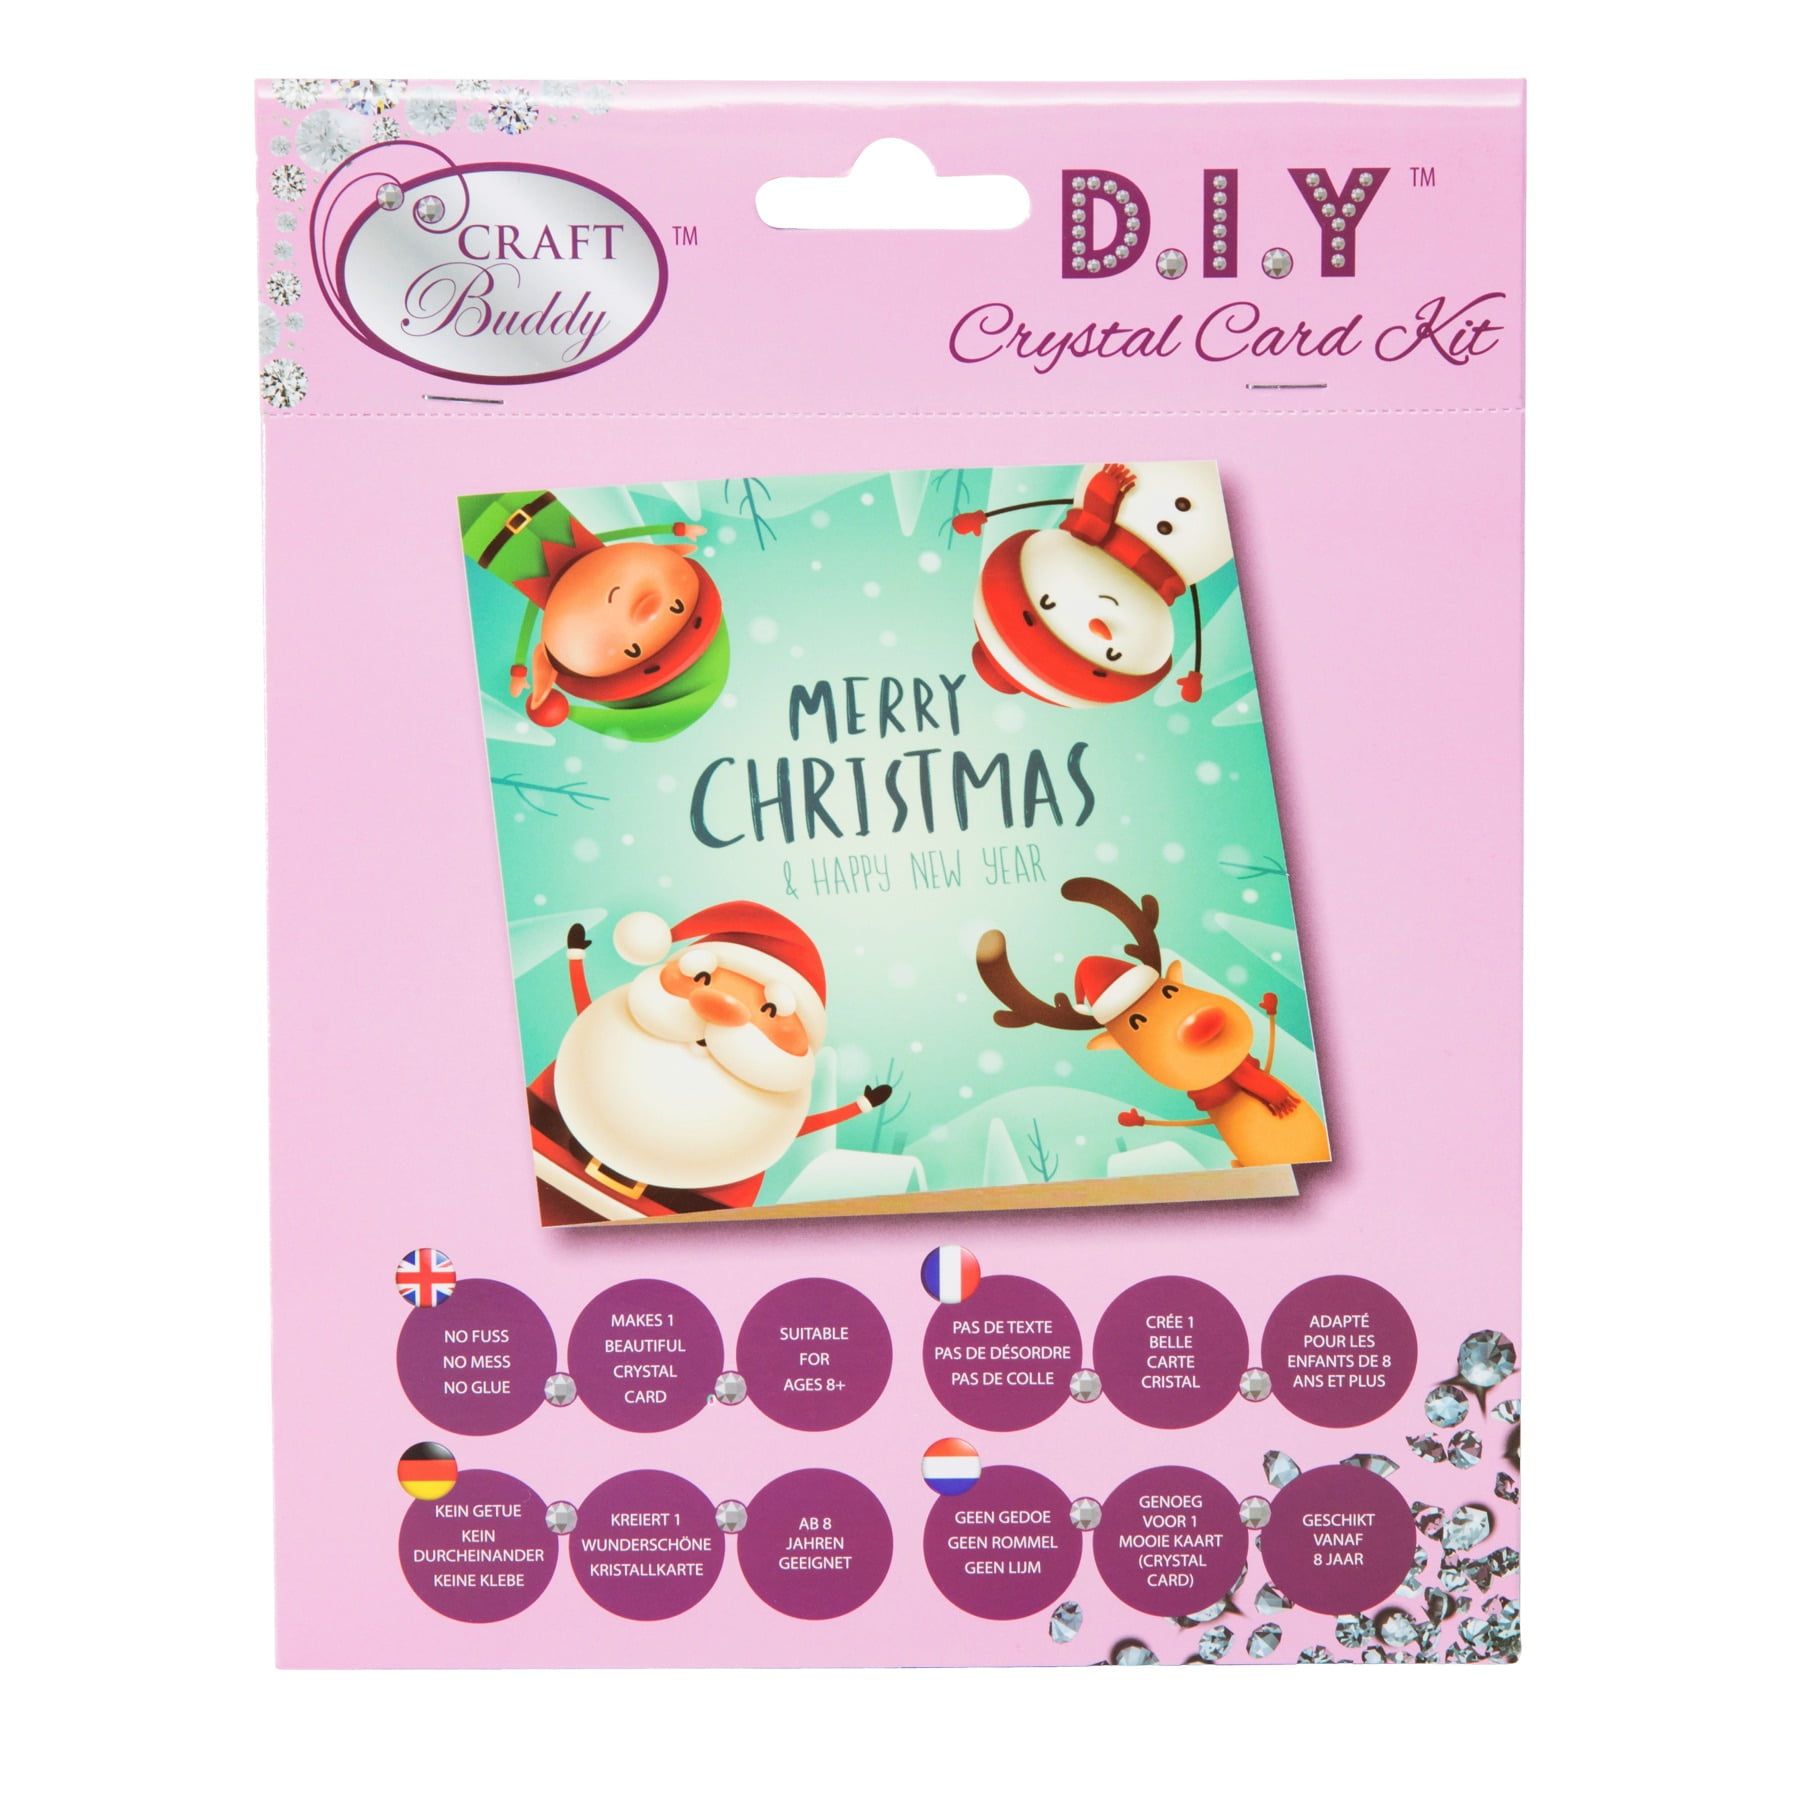 Craft Buddy DIY Crystal Christmas Card Kit, Dragon Gift - Anne Stokes